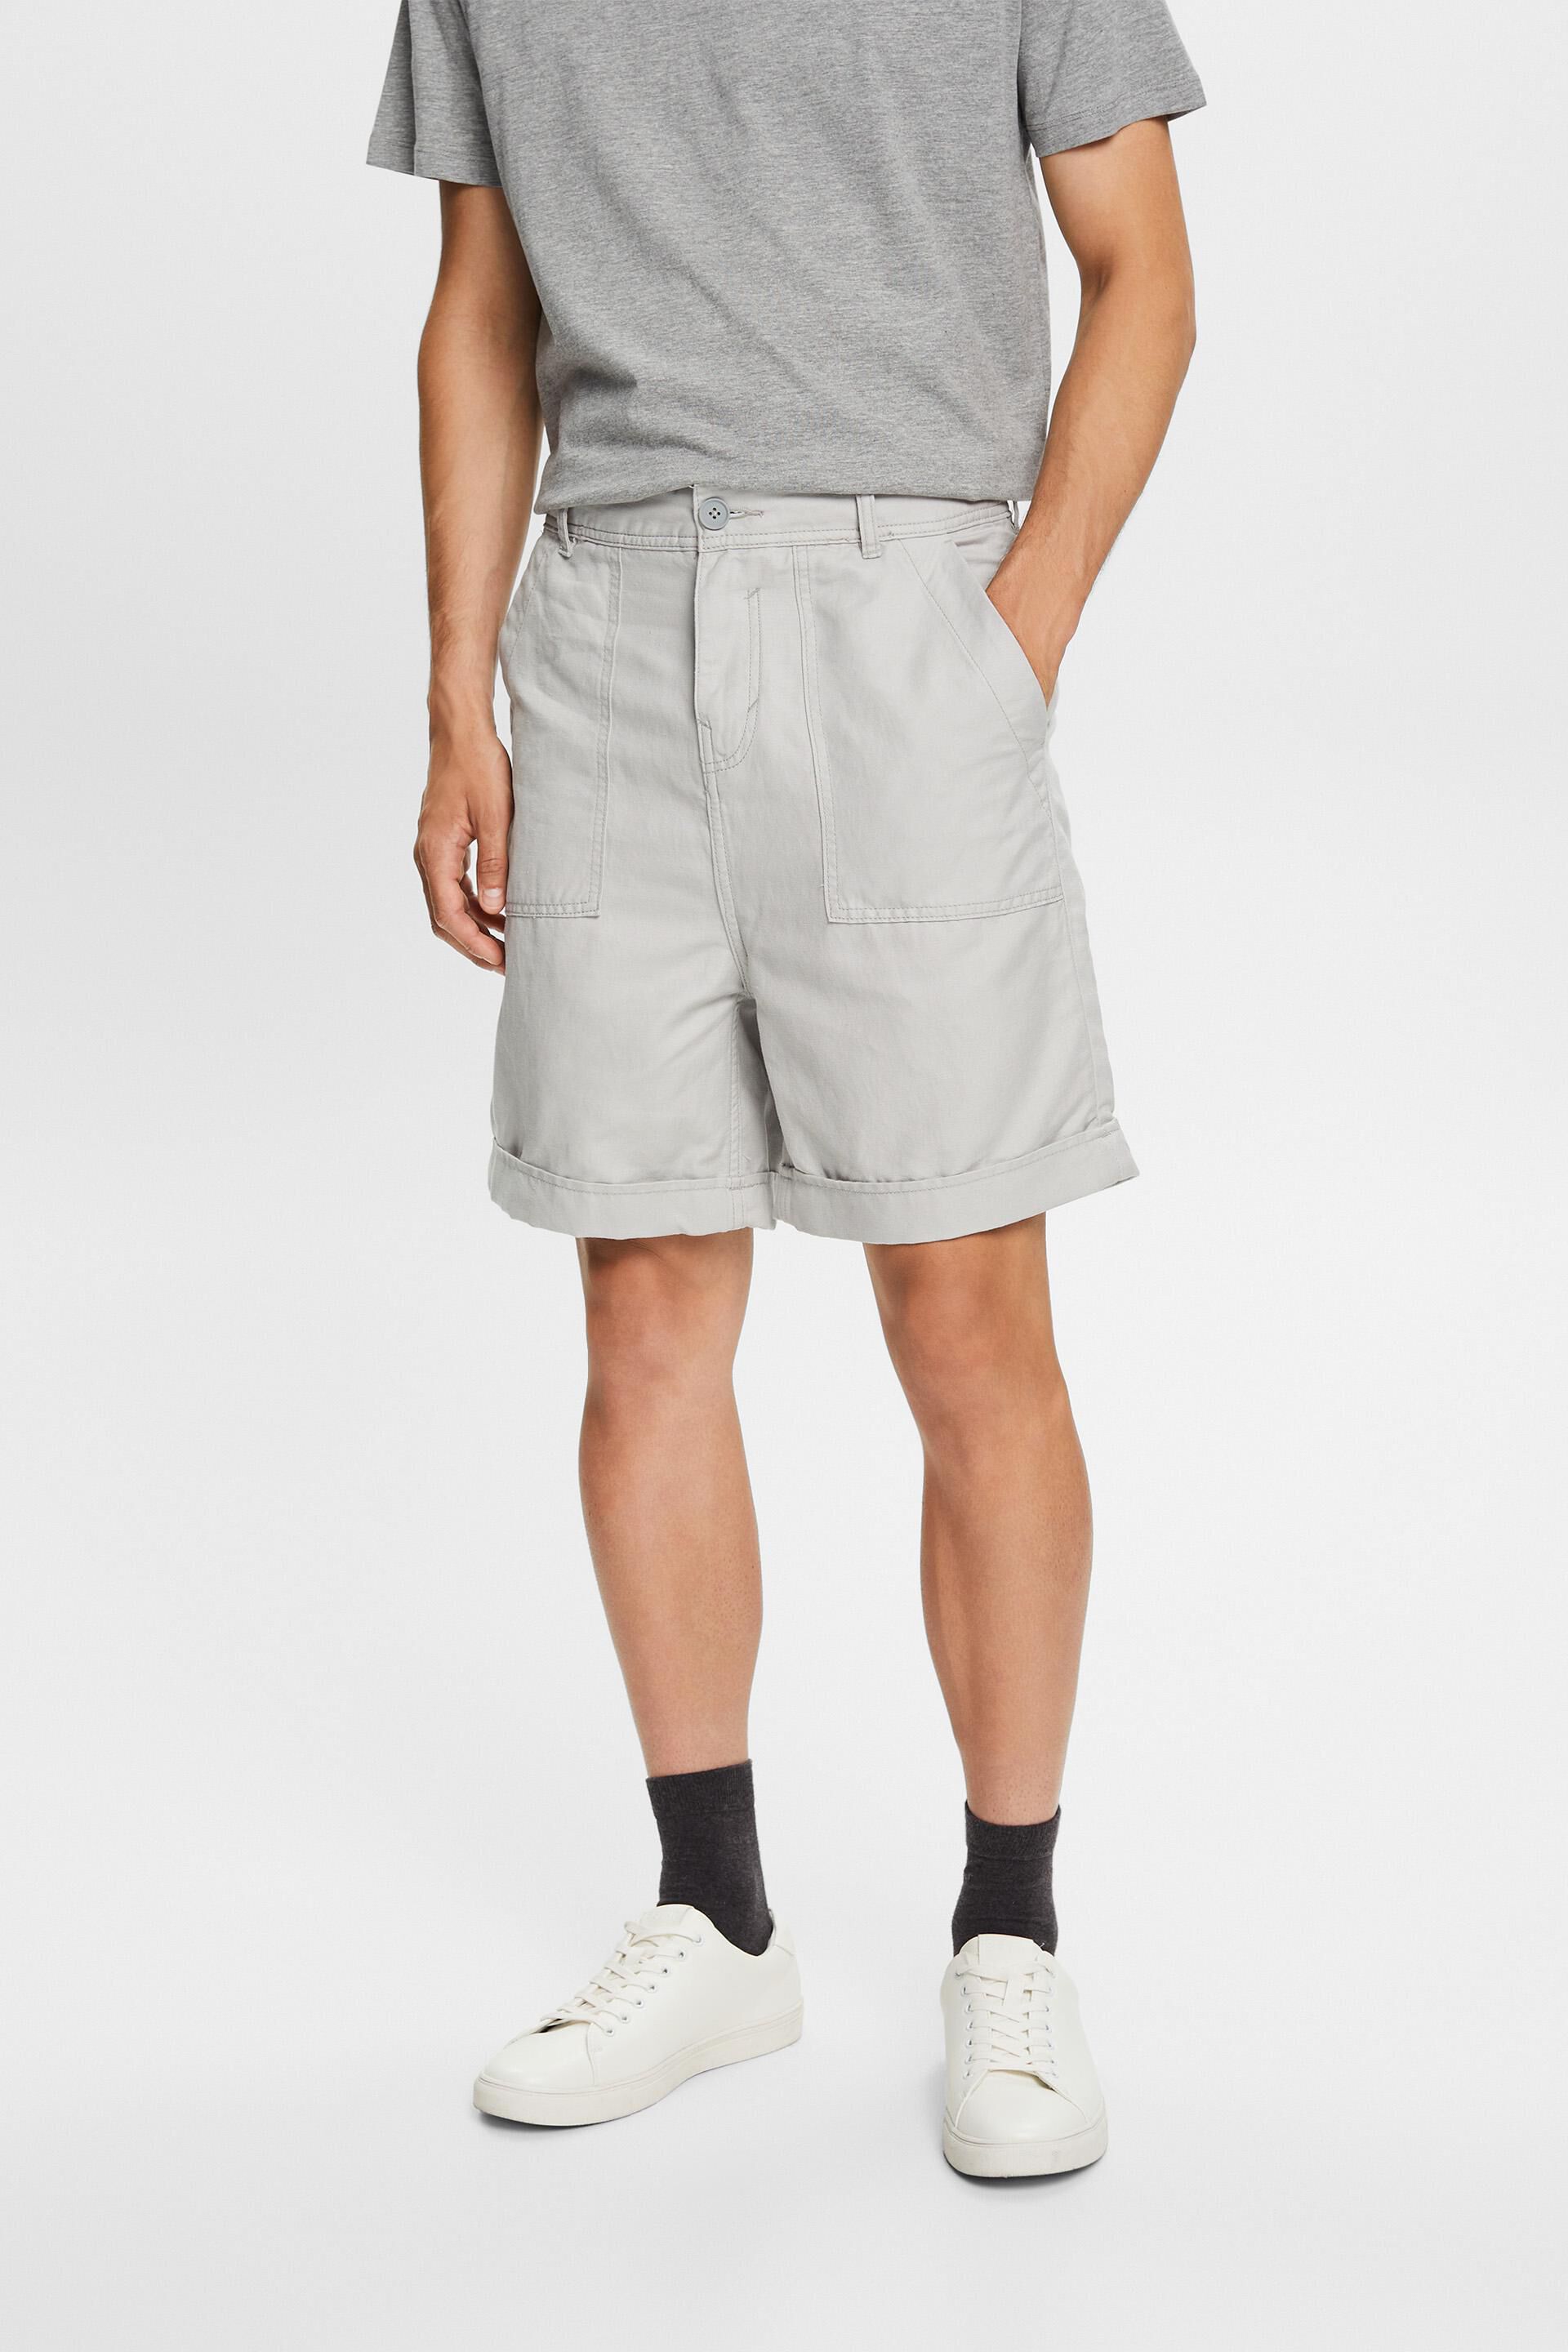 Esprit Bikini Bermuda shorts, cotton-linen blend